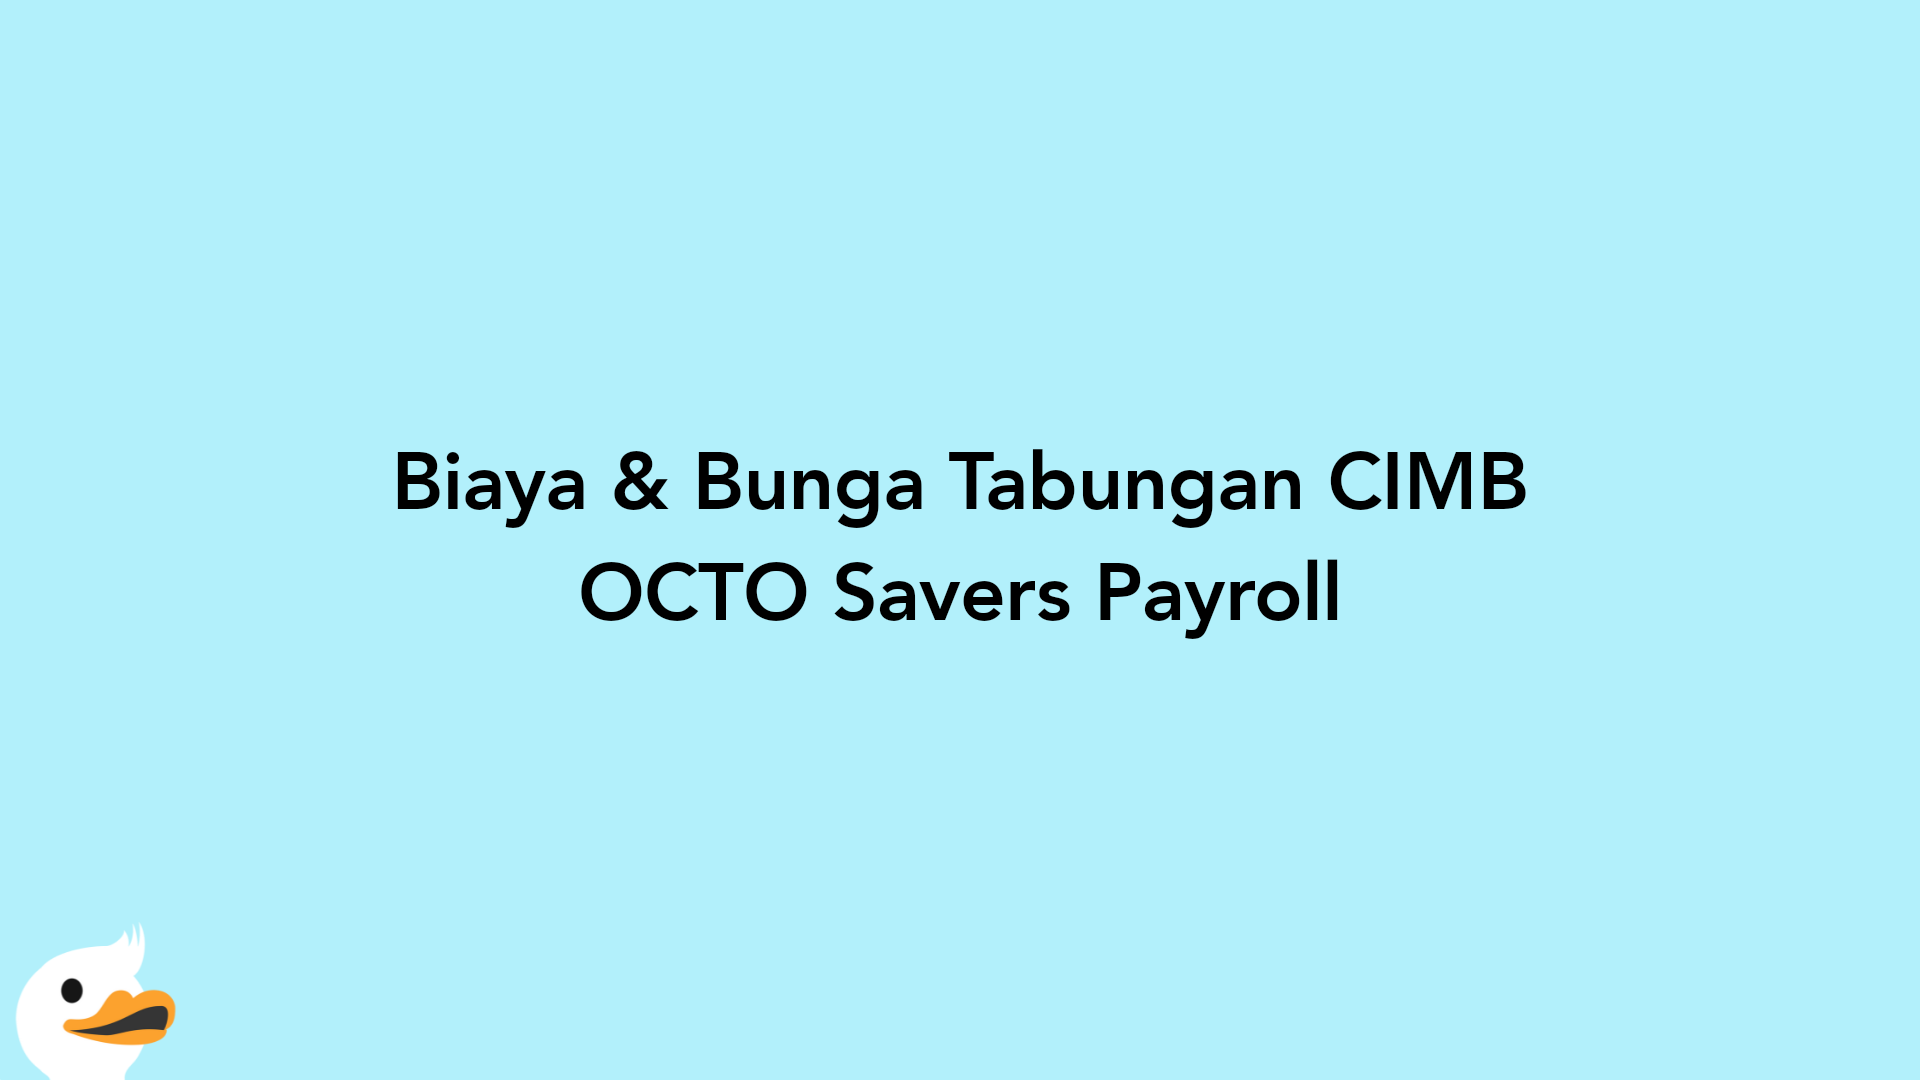 Biaya & Bunga Tabungan CIMB OCTO Savers Payroll